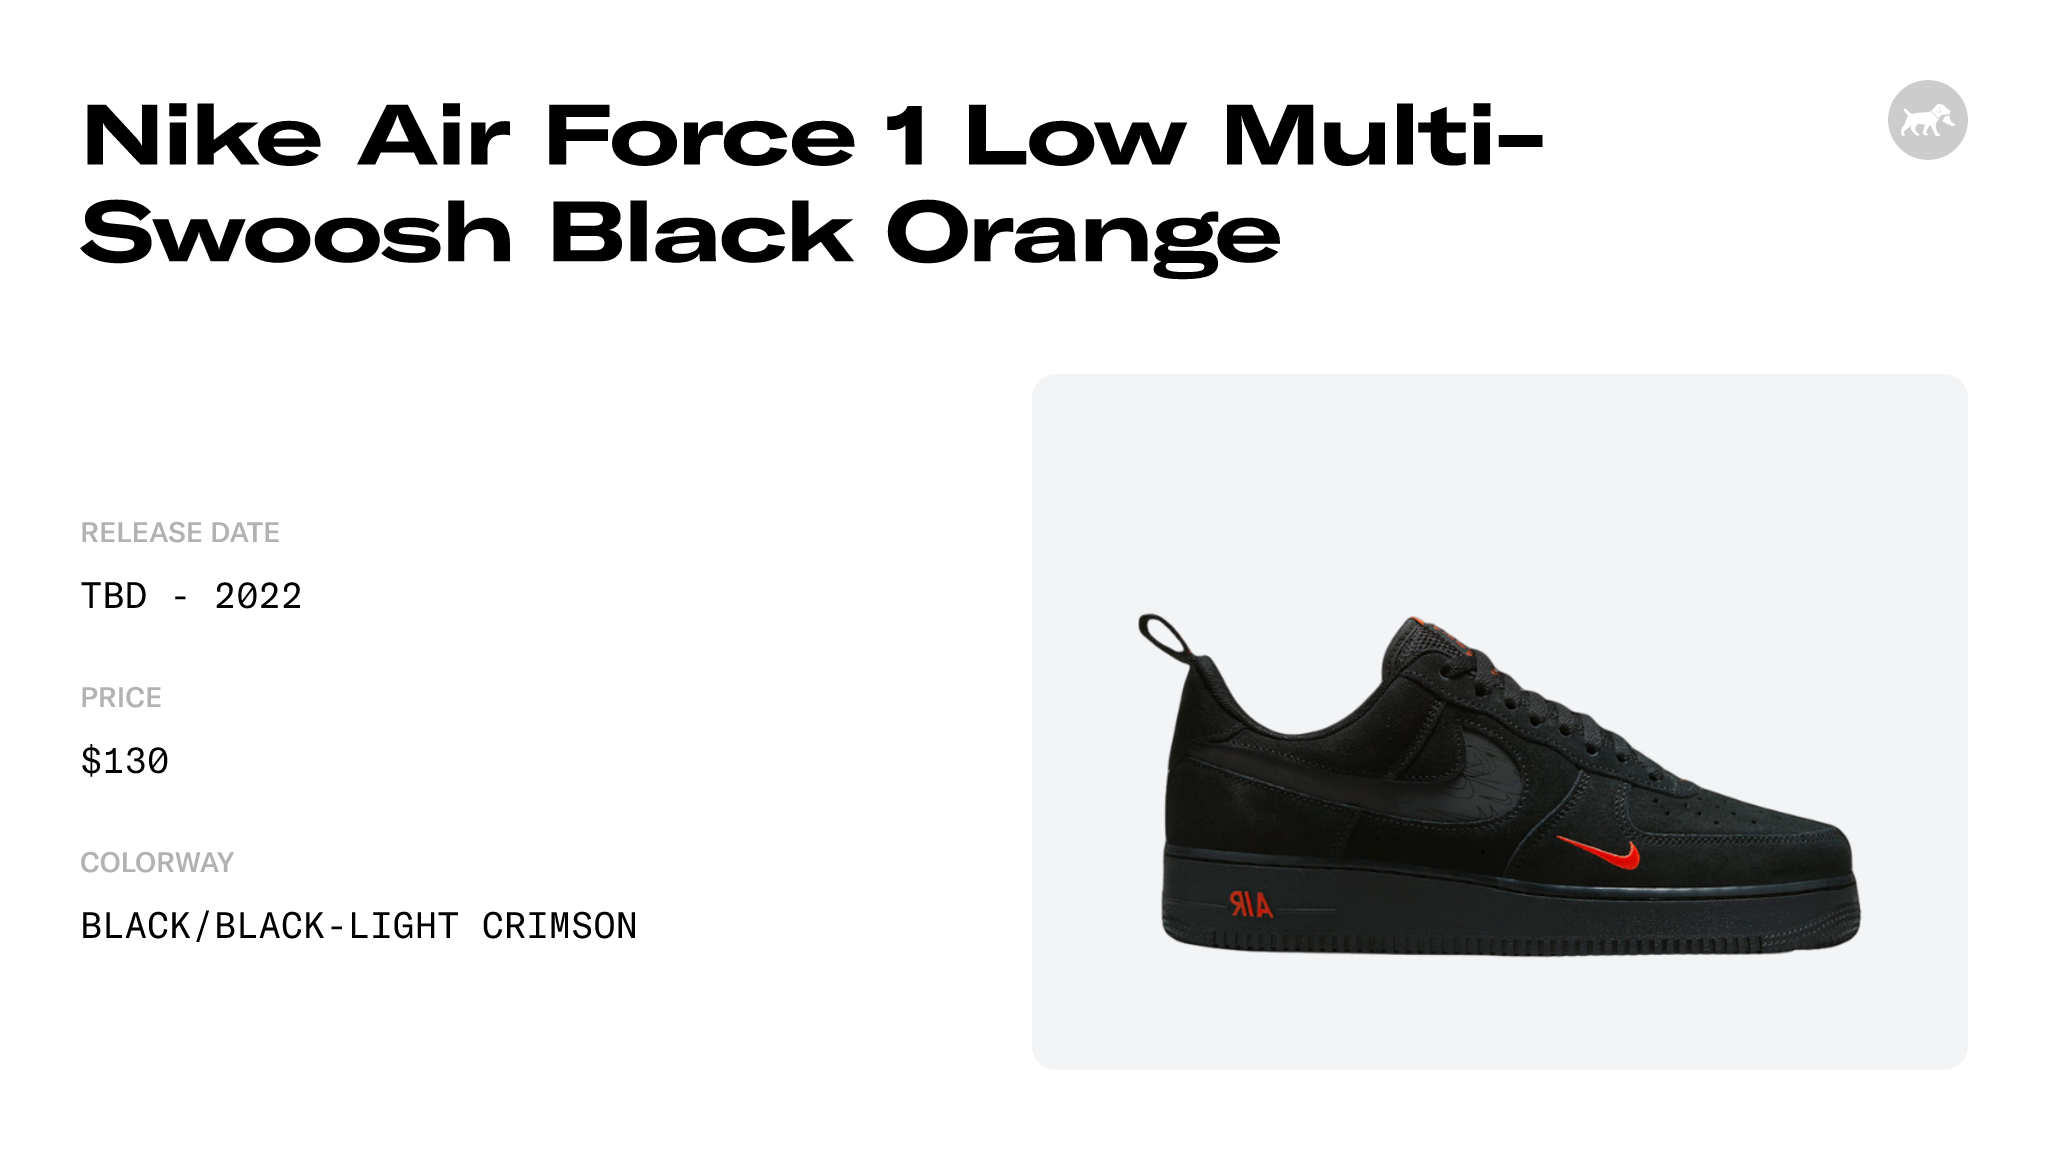 Nike Air Force 1 Low Multi-Swoosh Black Orange - DZ4514-001 Raffles and  Release Date